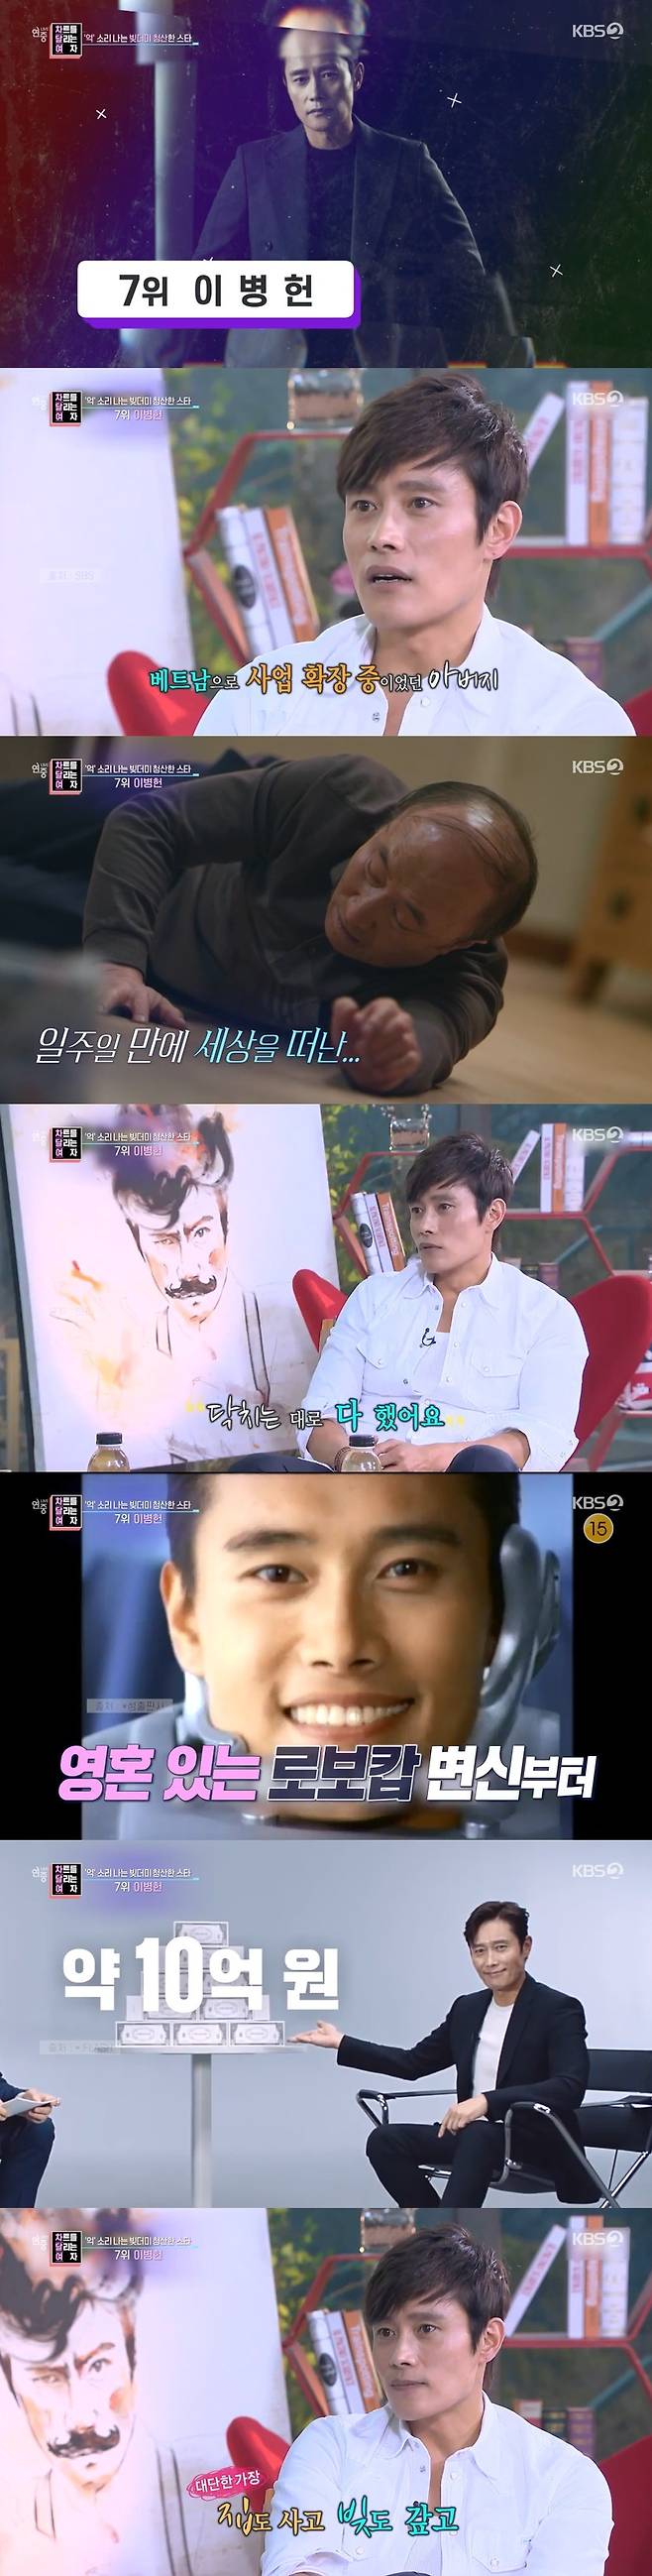 KBS 2TV '연중 라이브' 캡처 © 뉴스1